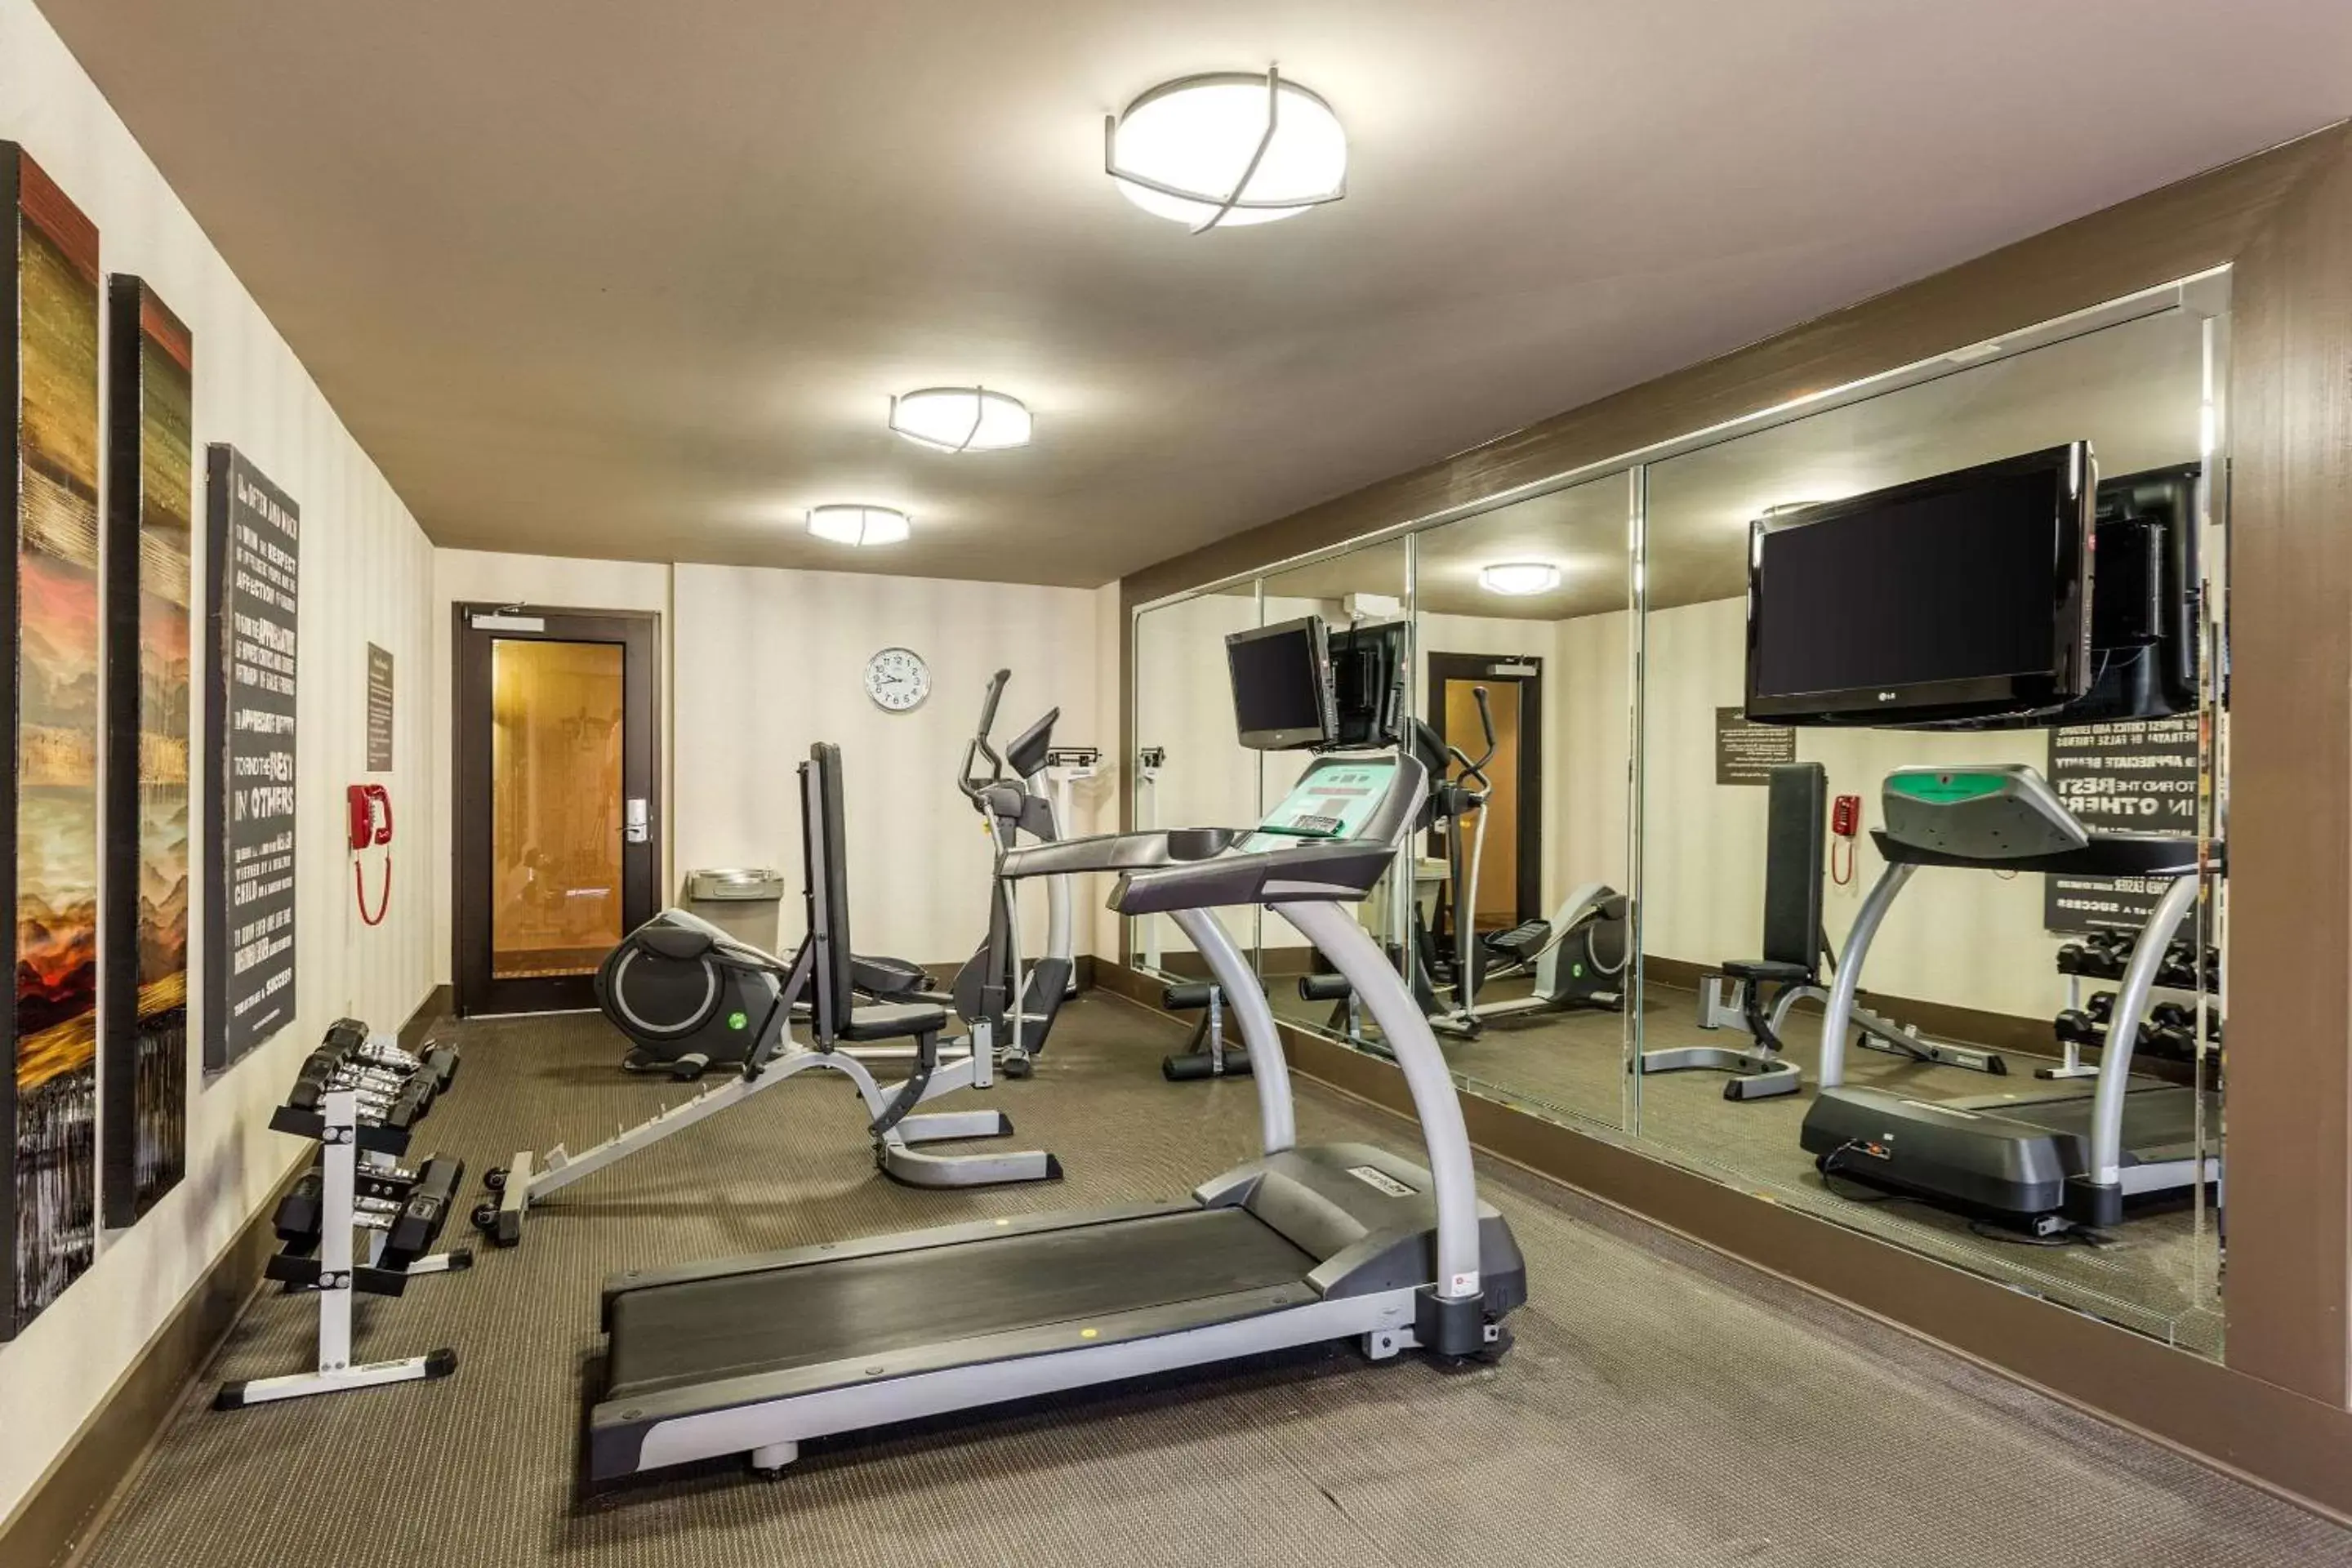 Fitness centre/facilities, Fitness Center/Facilities in Comfort Inn Tupelo